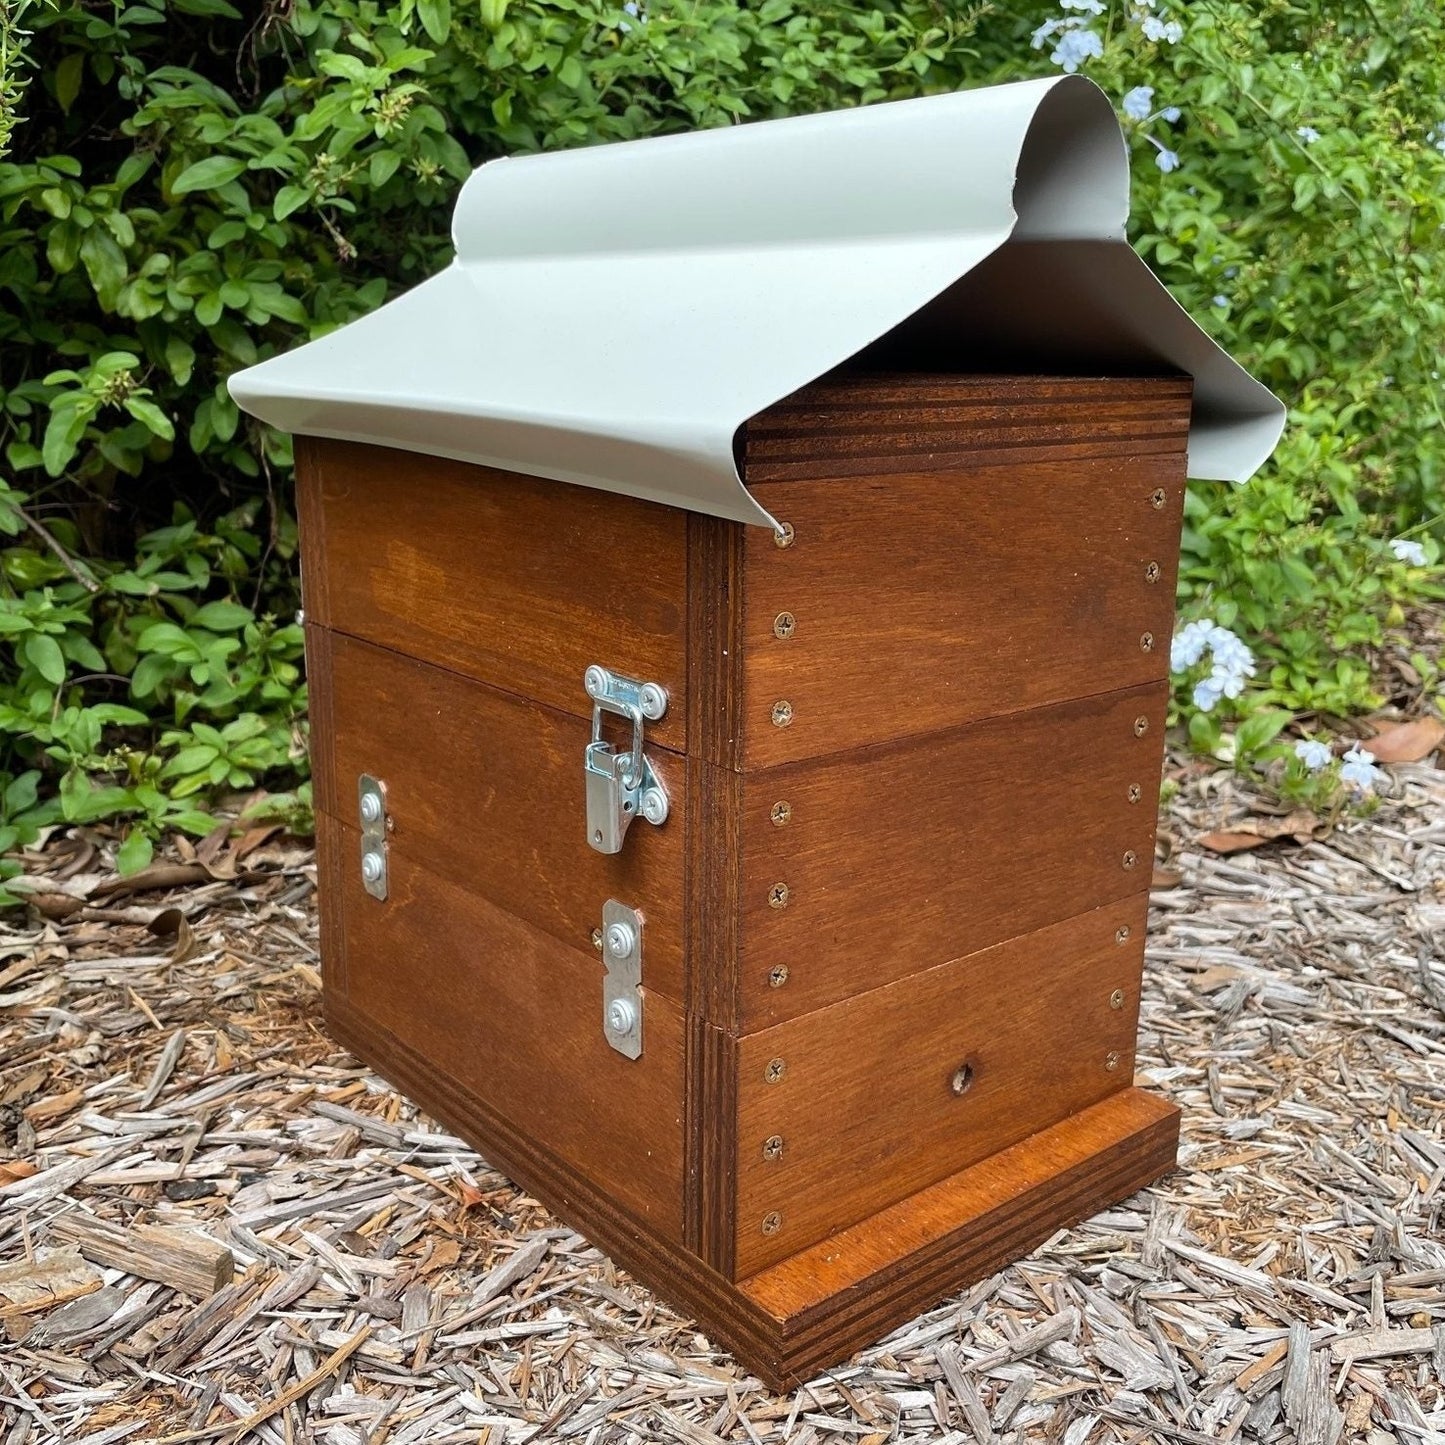 Honey Jar Hinged Lid Beehive OATH Box Stingless Australian Native Bee Hive